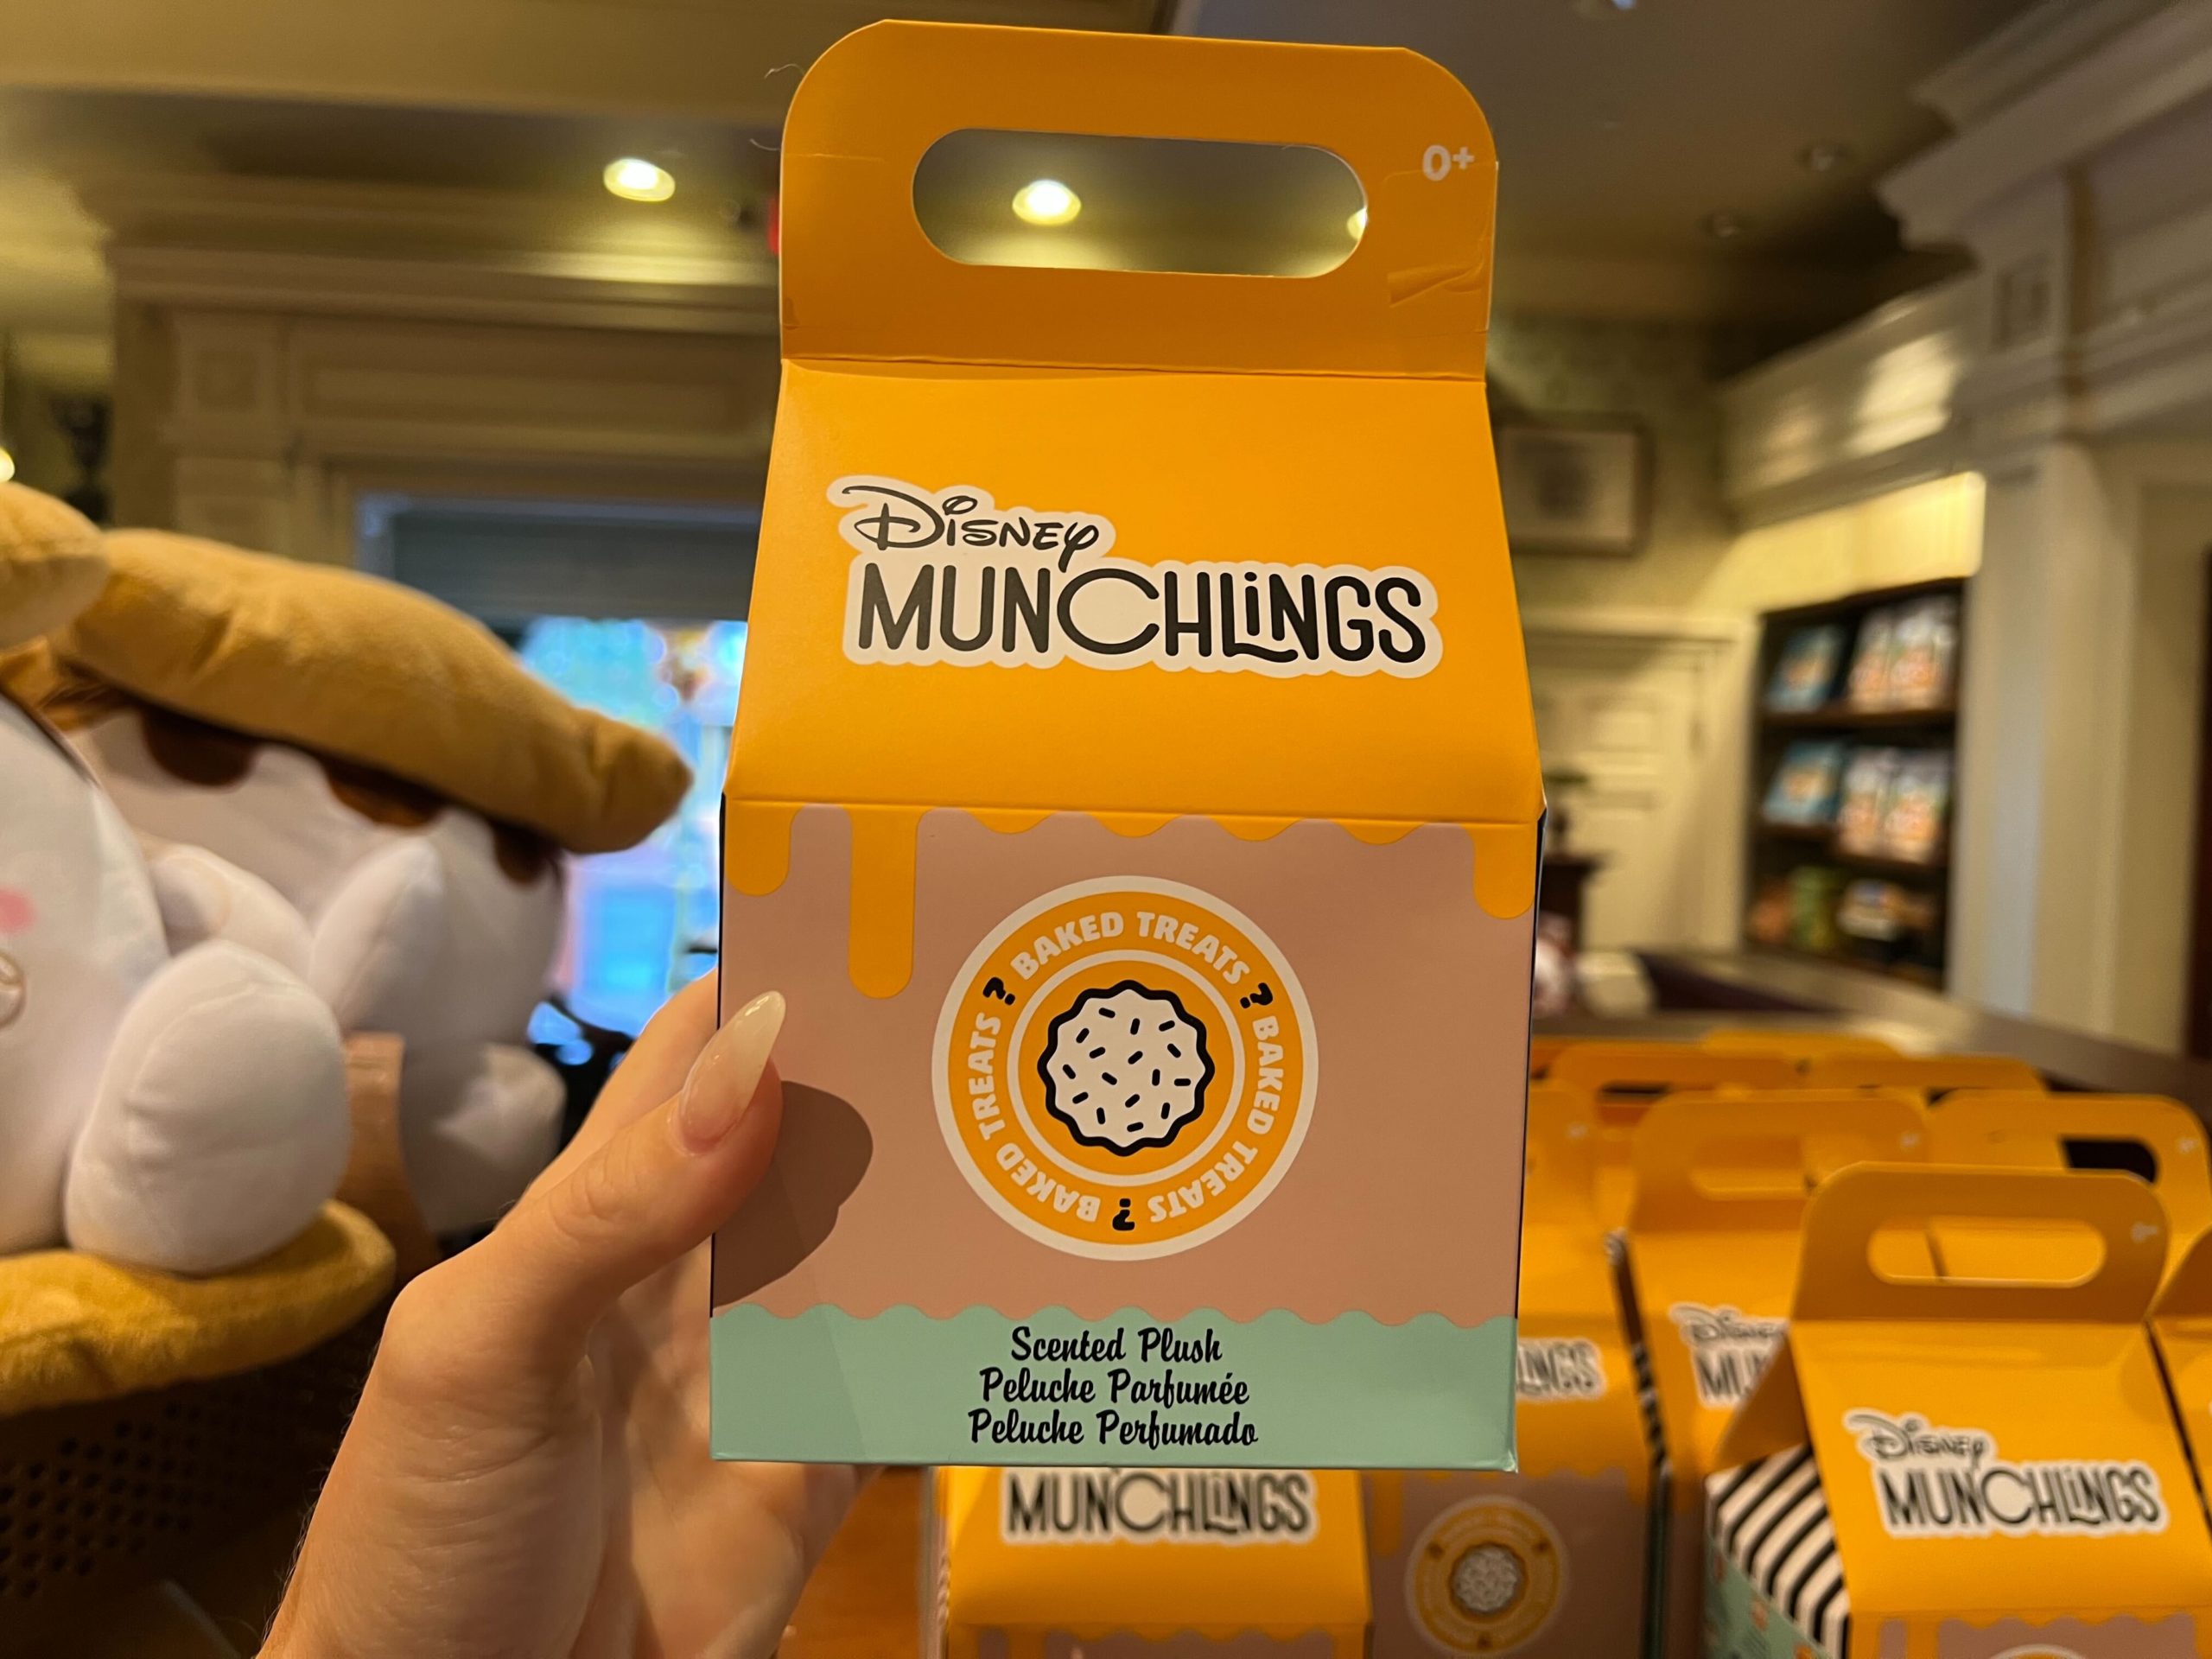 Munchlings scented plush box